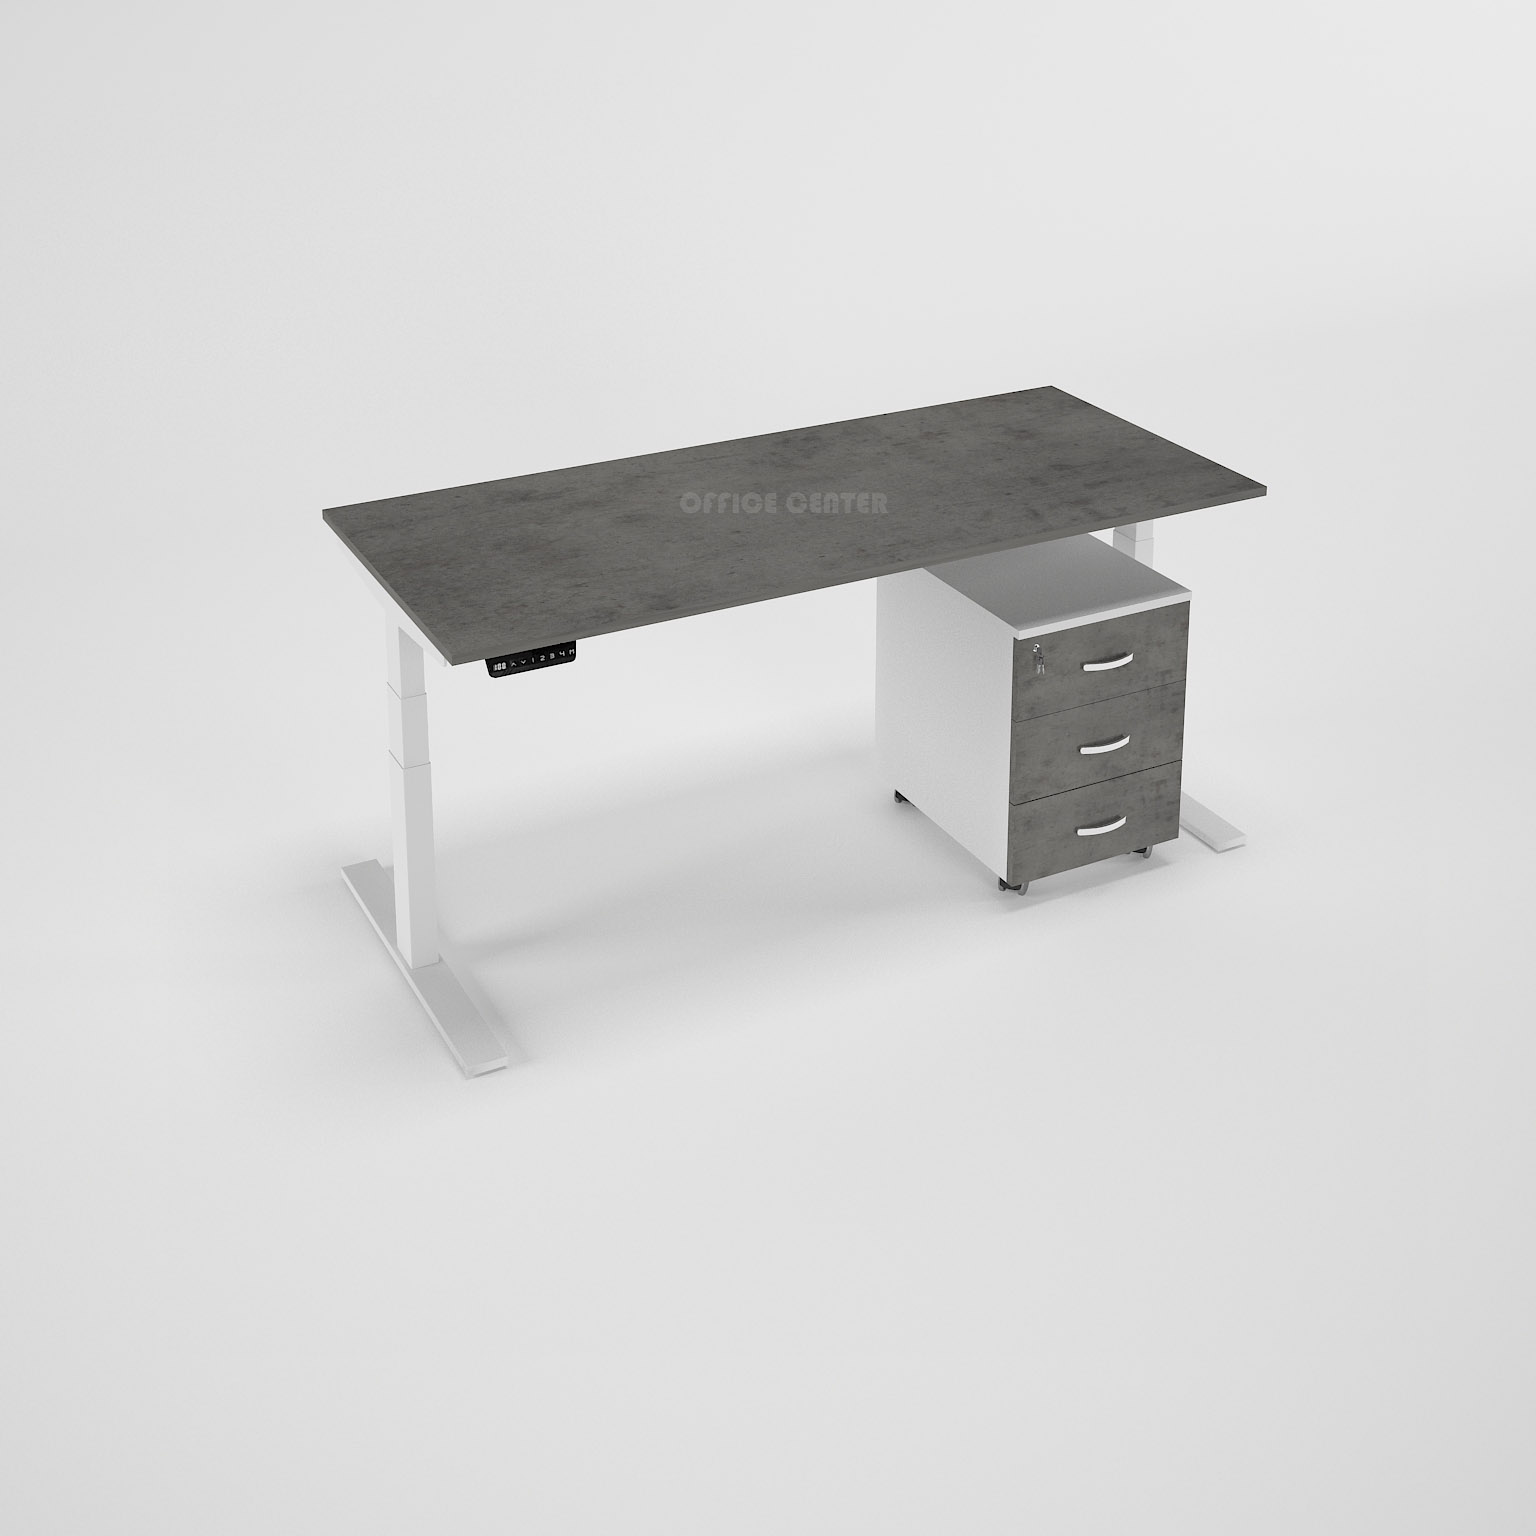 Alex S2 Height adjustable desk